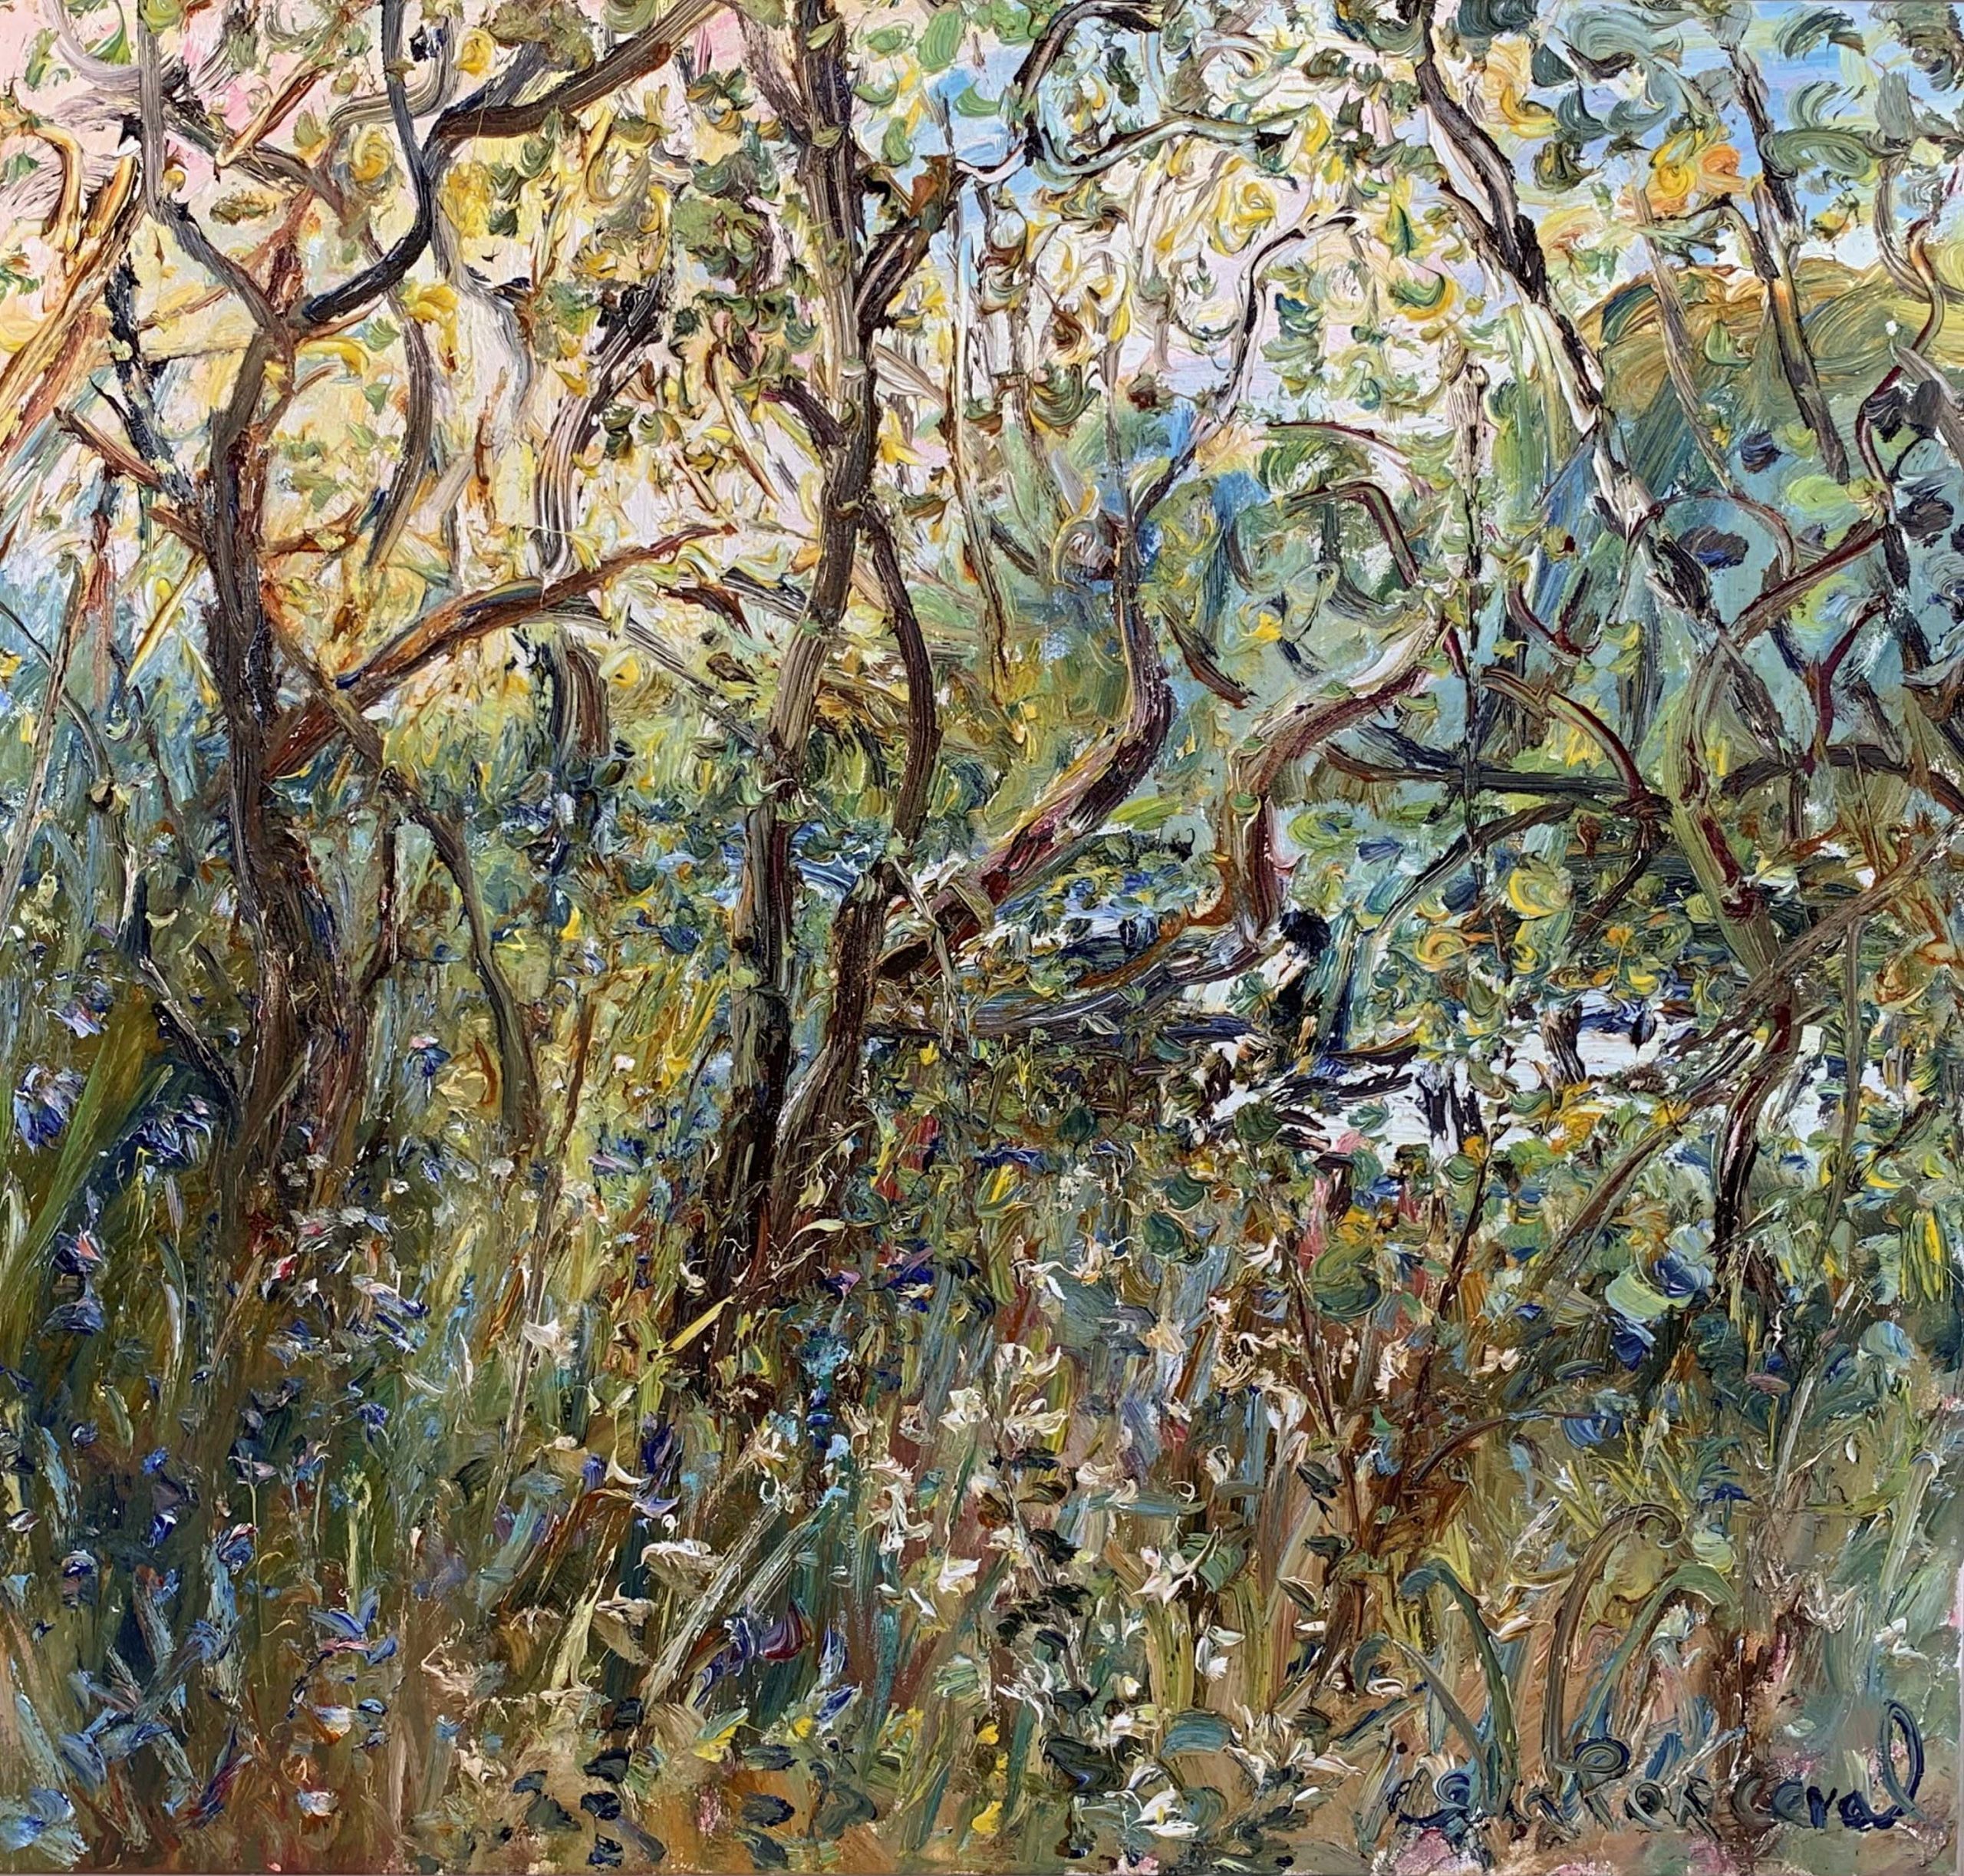 Celia Perceval 'Bluebells and snowdrops in swamp in cwm coed y cerrig, Wales' oil on canvas 80 x 85cm $14,000